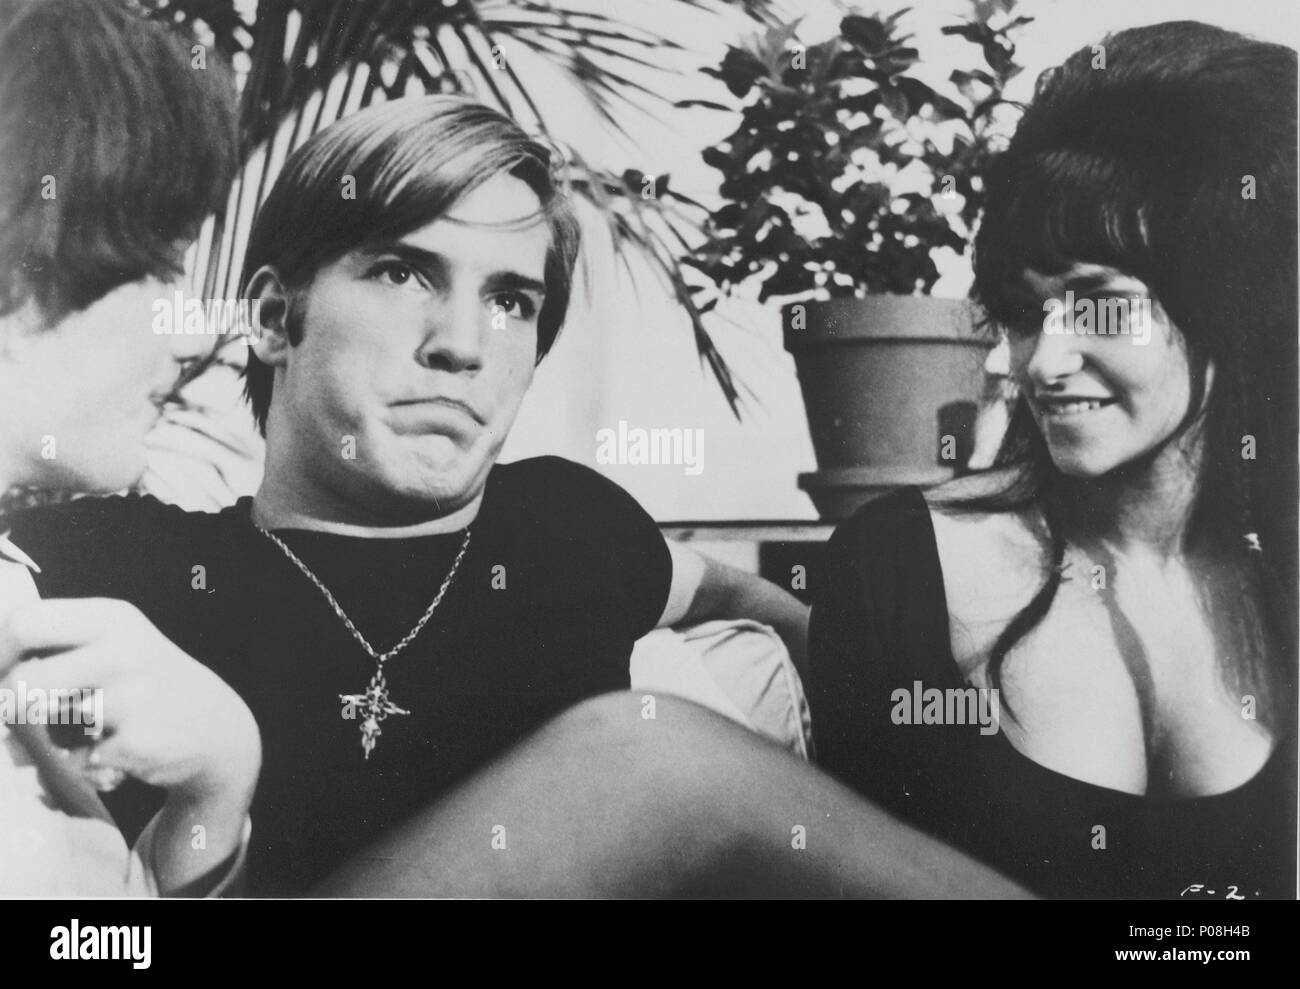 Original Film Title: FLESH.  English Title: FLESH.  Film Director: PAUL MORRISSEY.  Year: 1968.  Stars: JOE DALLESANDRO. Credit: FILMFACTORY / Album Stock Photo